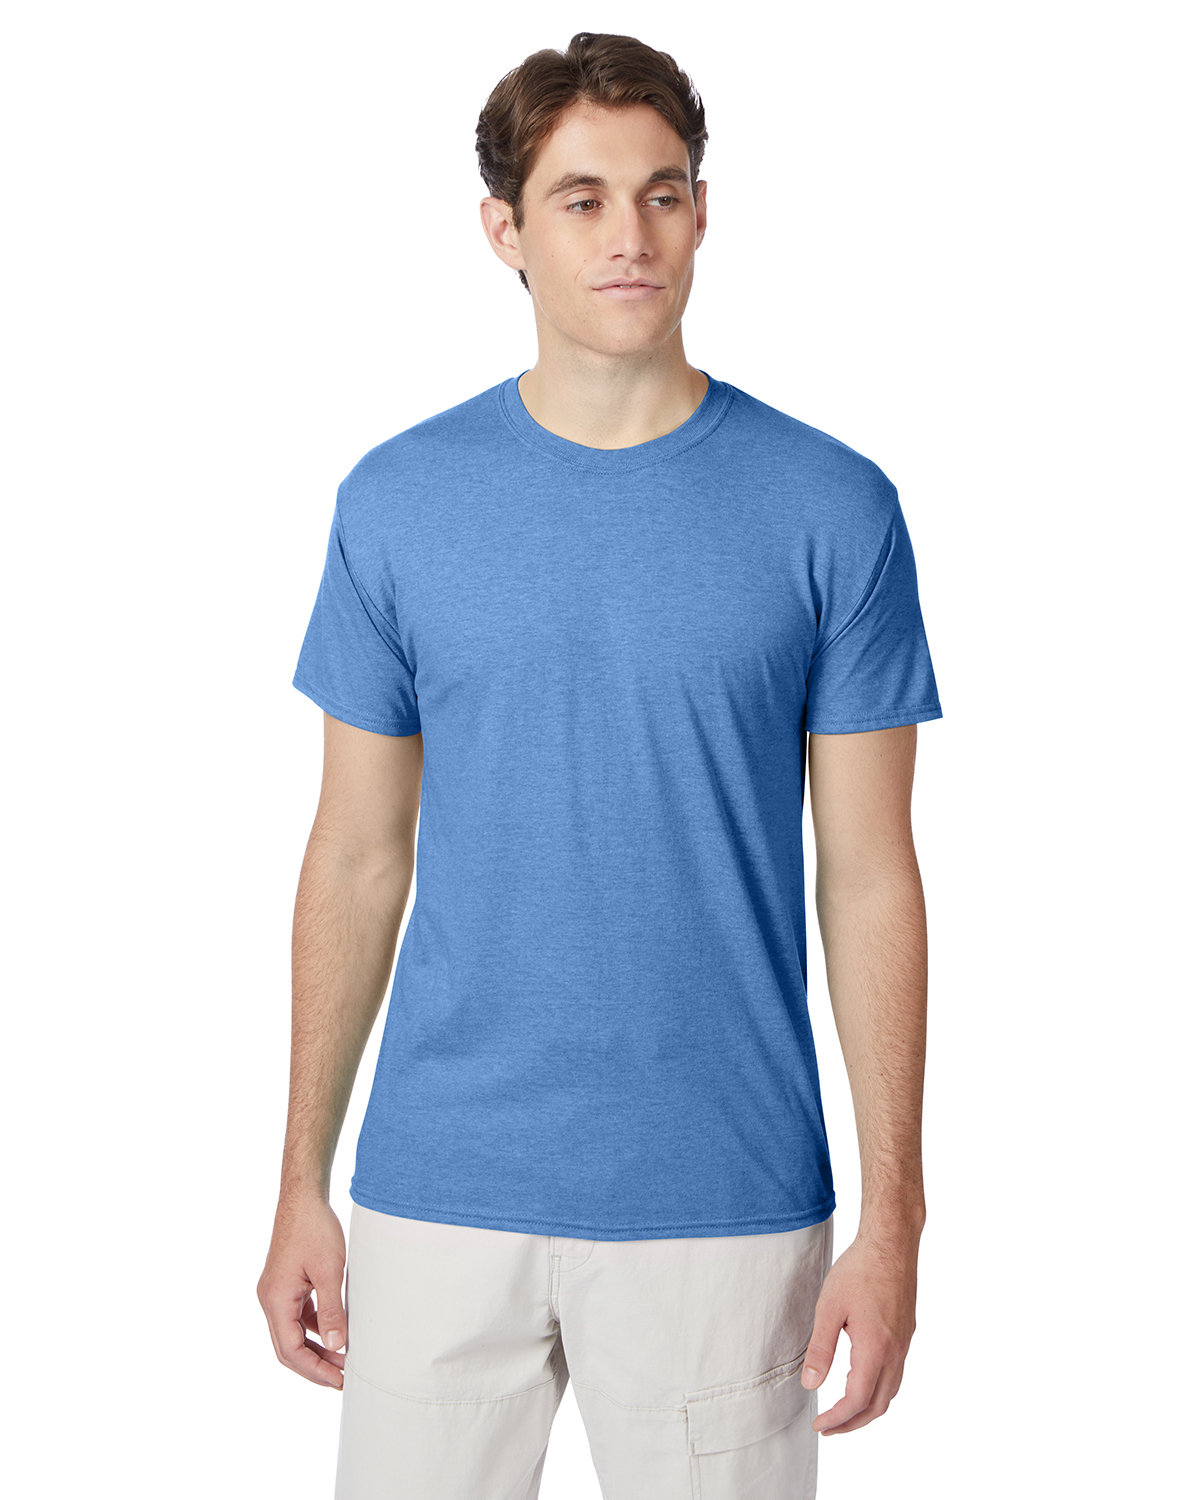 Hanes Blue Polyester Wireless T Shirt Bra Size M (42)